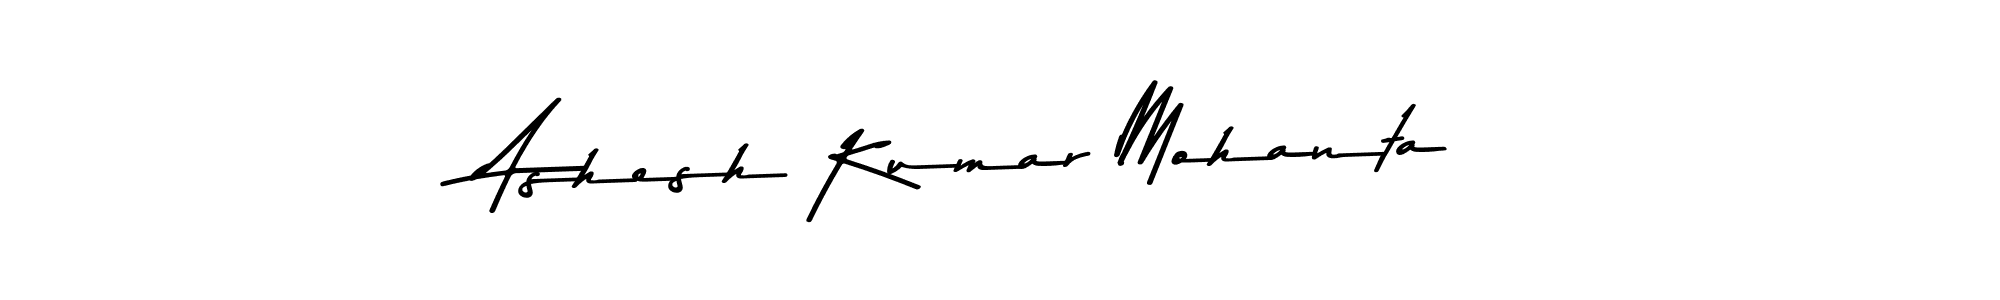 Ashesh Kumar Mohanta stylish signature style. Best Handwritten Sign (Asem Kandis PERSONAL USE) for my name. Handwritten Signature Collection Ideas for my name Ashesh Kumar Mohanta. Ashesh Kumar Mohanta signature style 9 images and pictures png